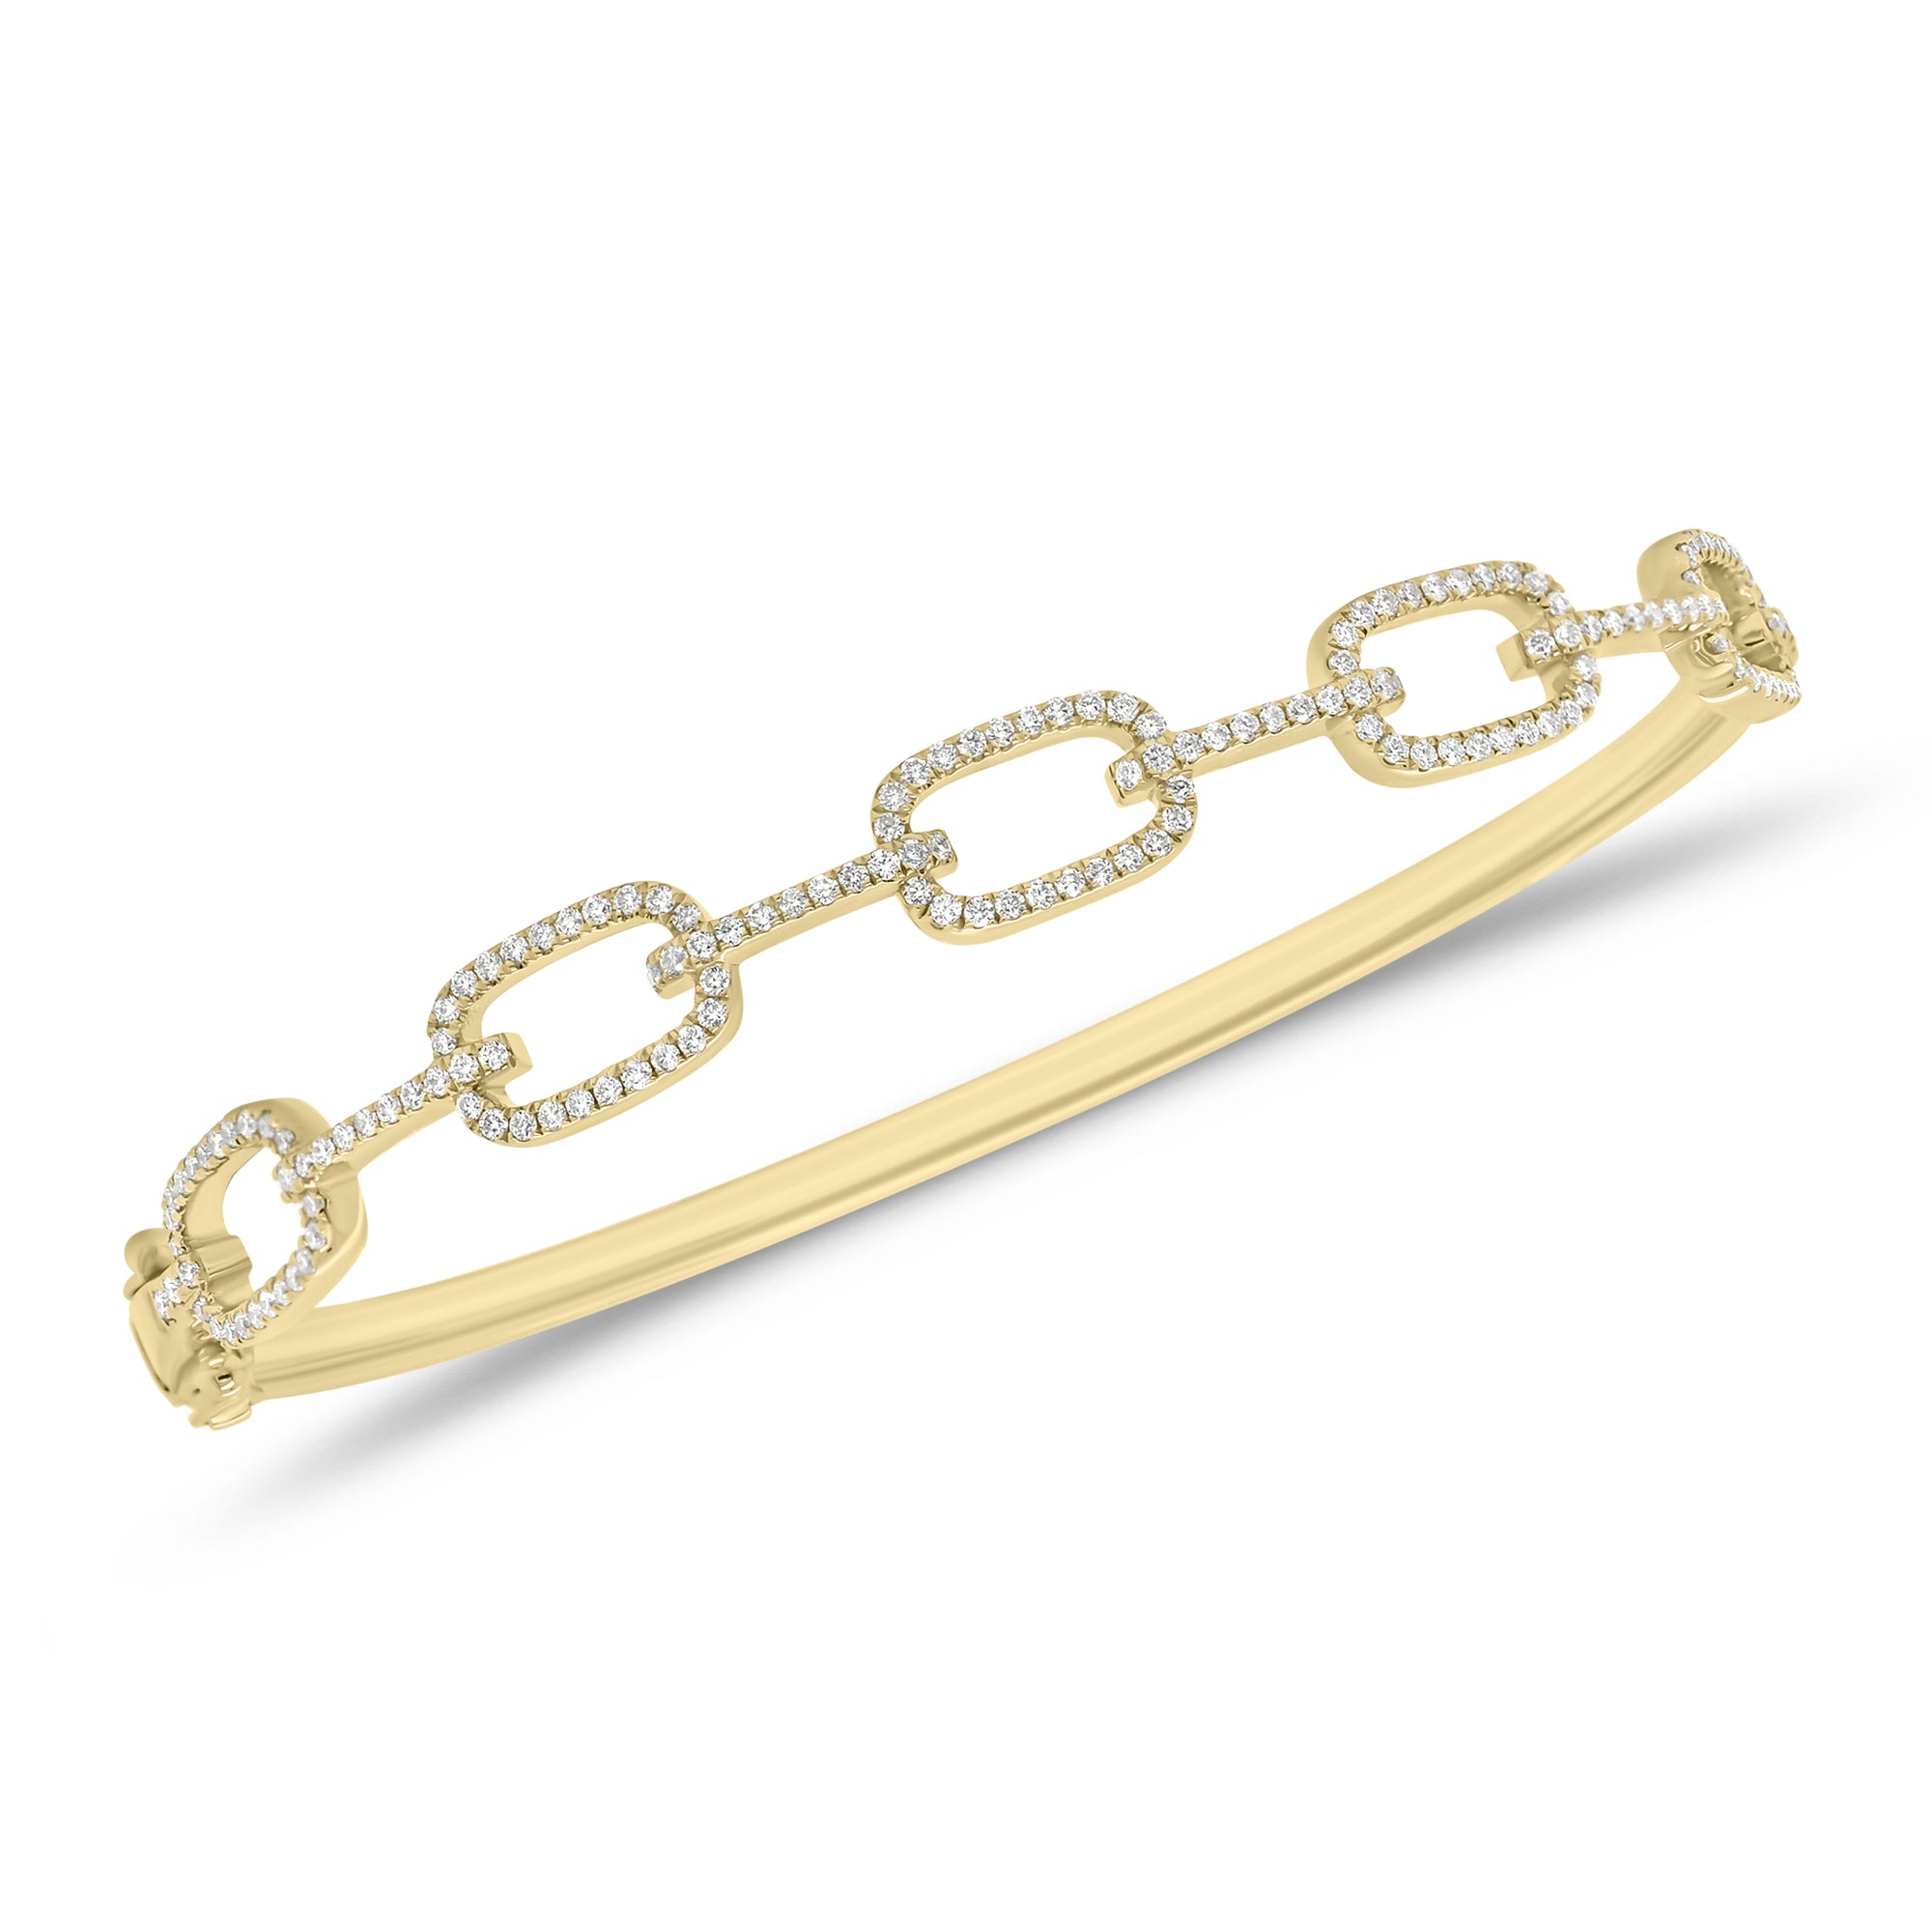 Diamond Mod Link Bangle Bracelet - 14K gold weighing 10.11 grams  - 160 round diamonds weighing 0.56 carats